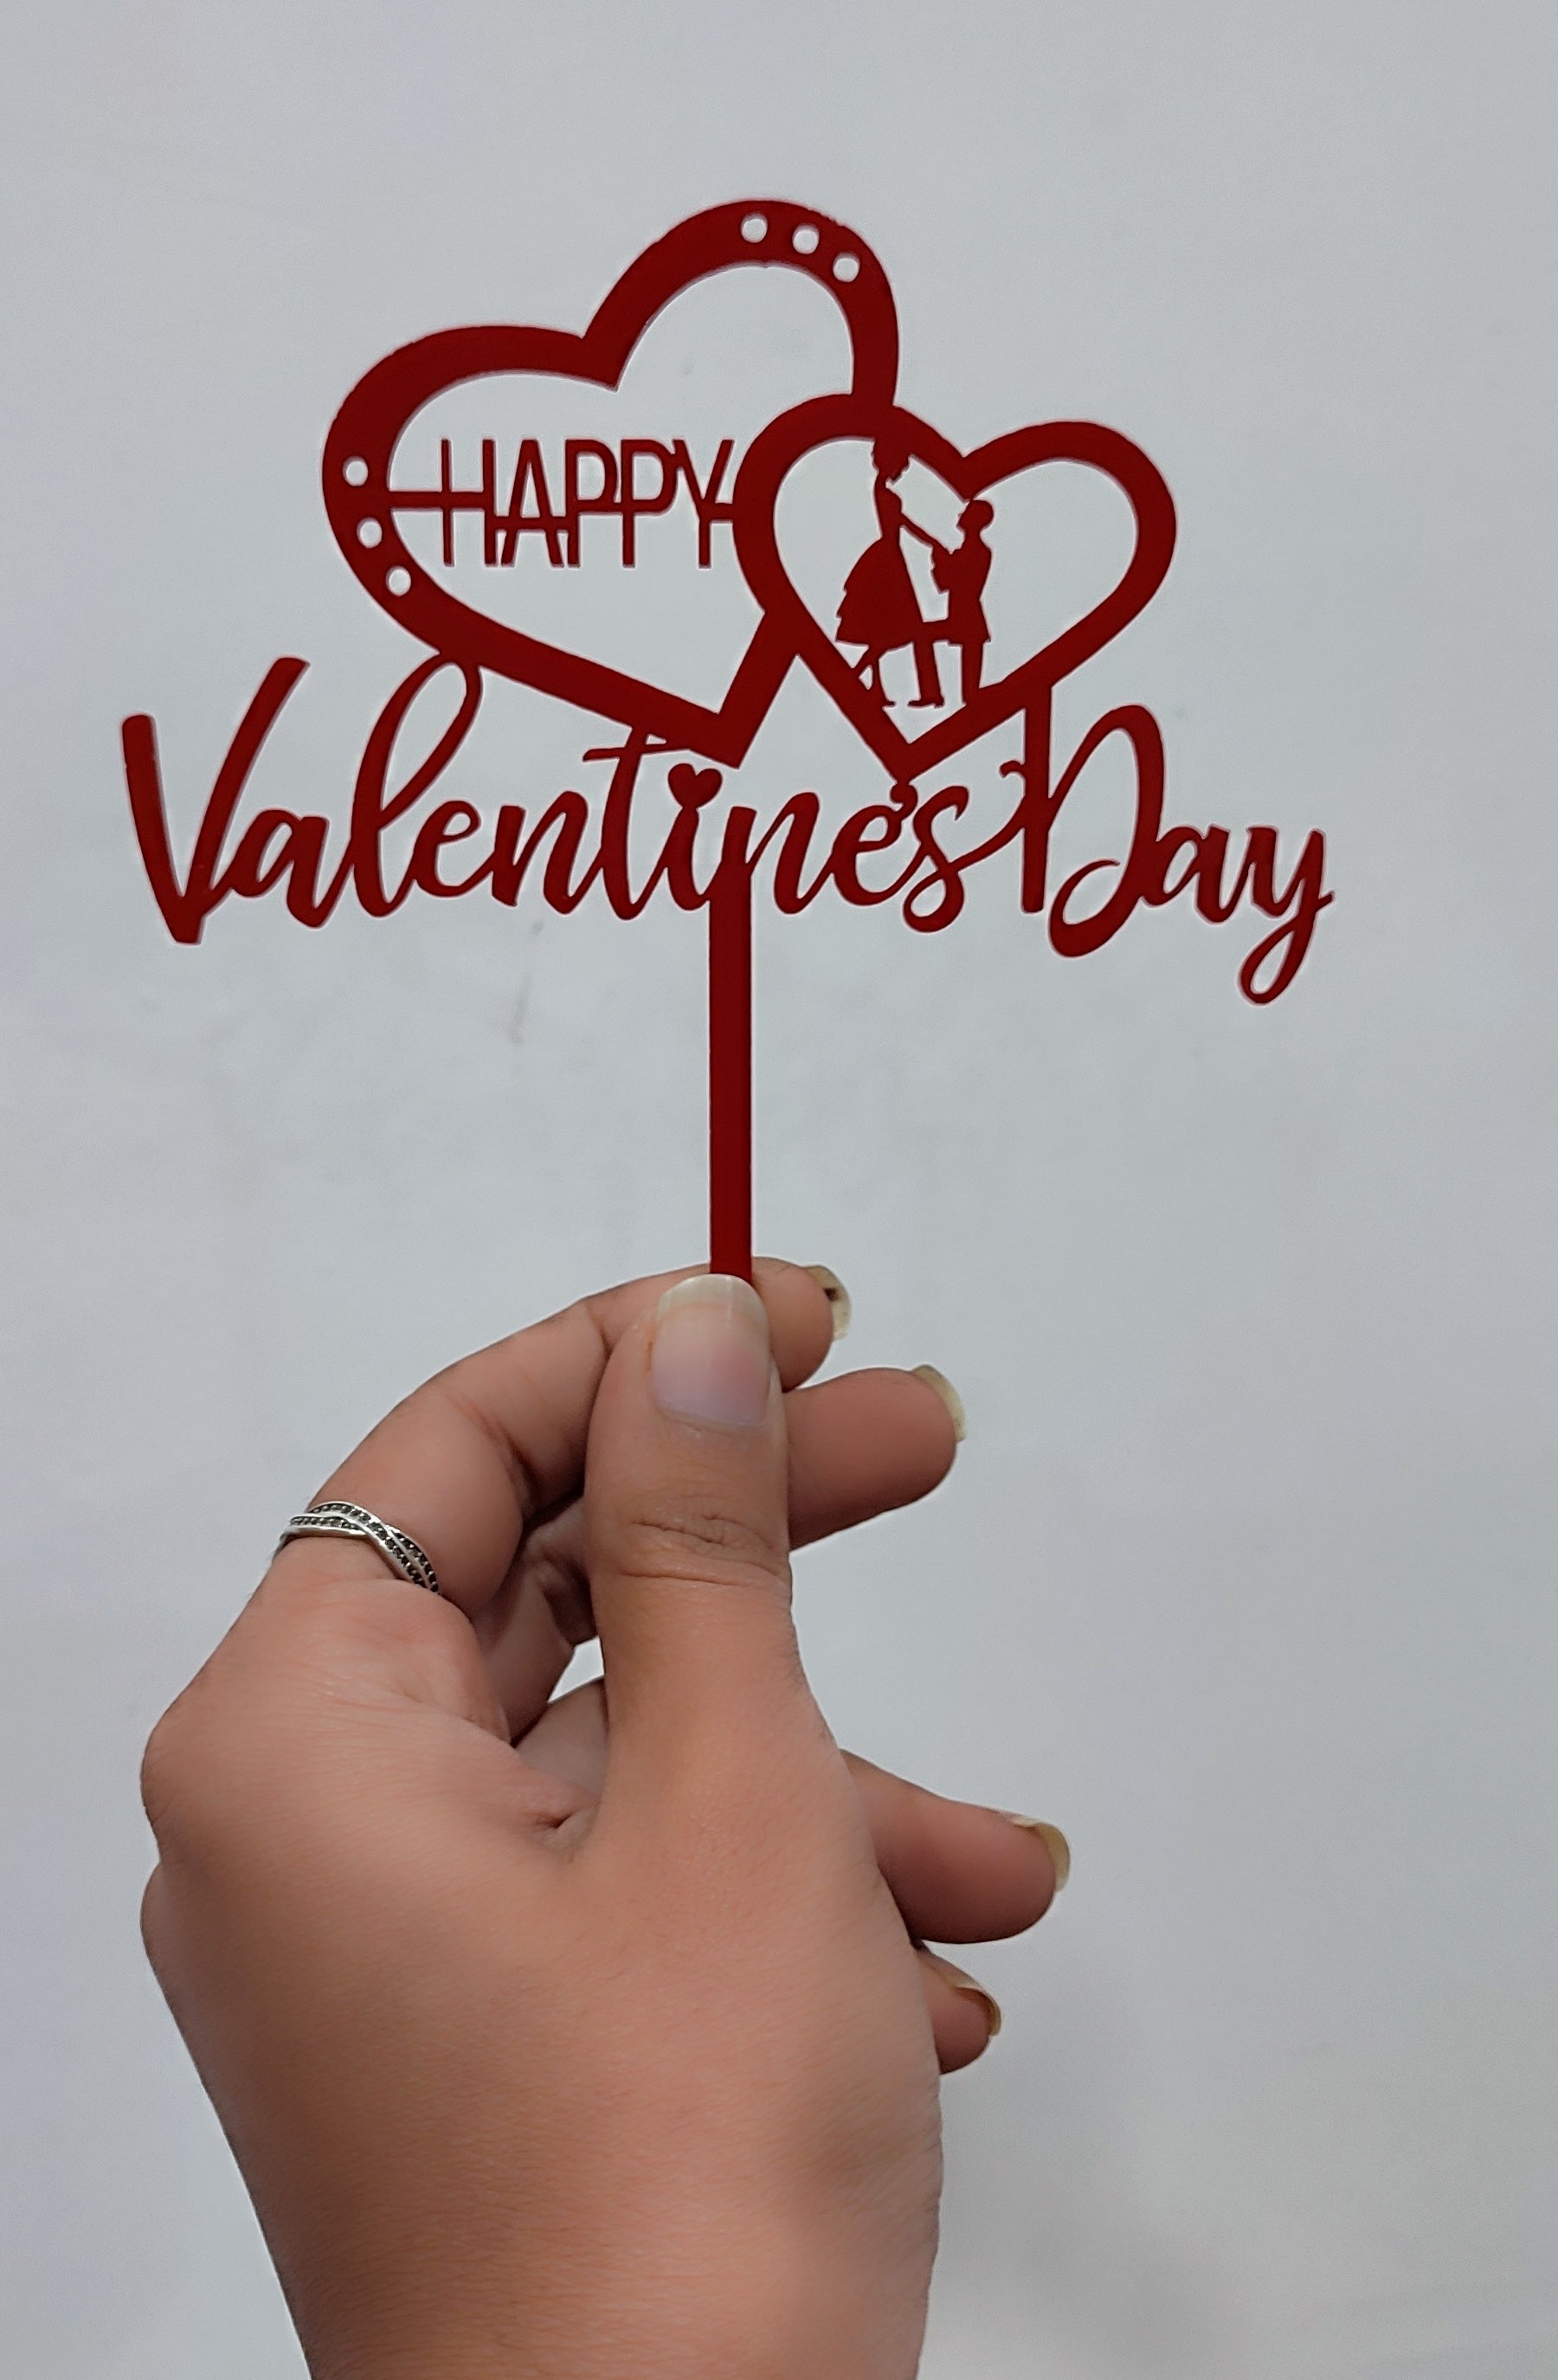 Happy Valentine Day Typography With Hearts, Happy Valentines Day